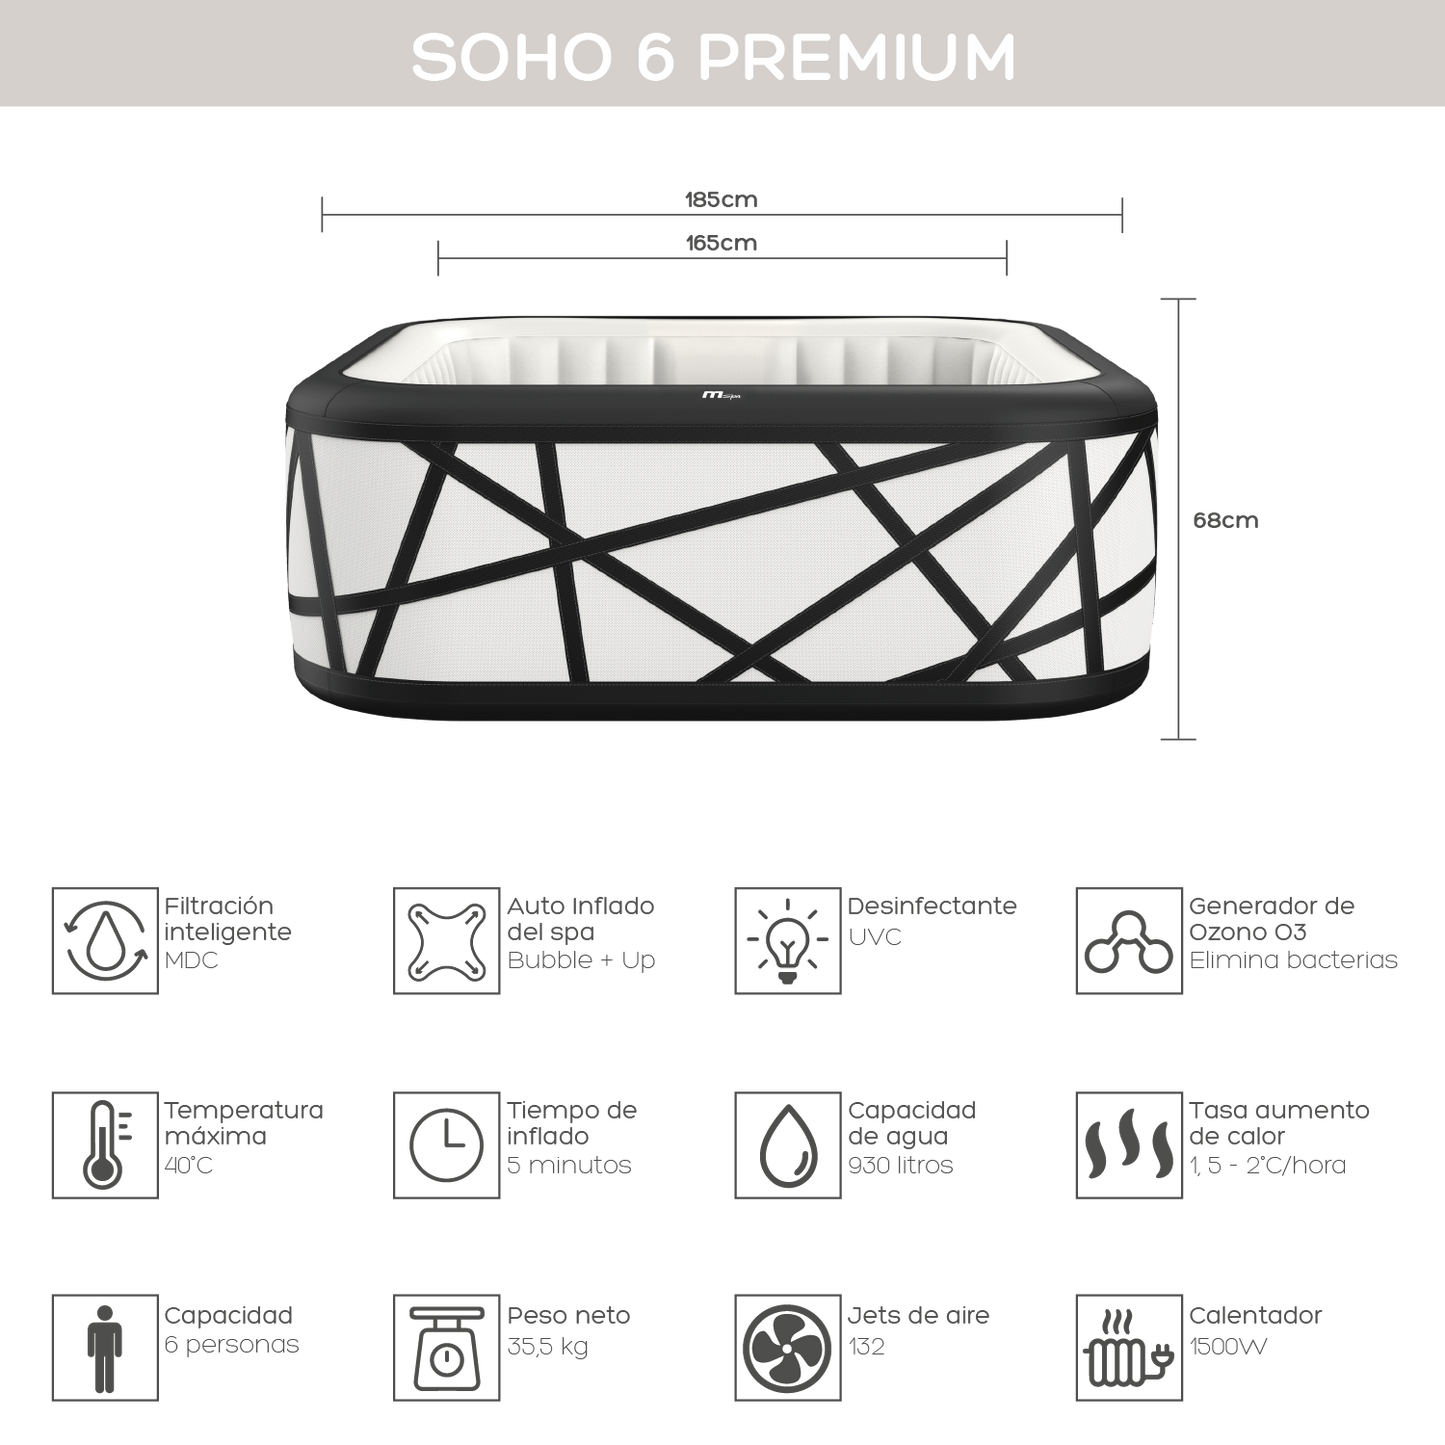 Hot Tub Soho 6 Premium